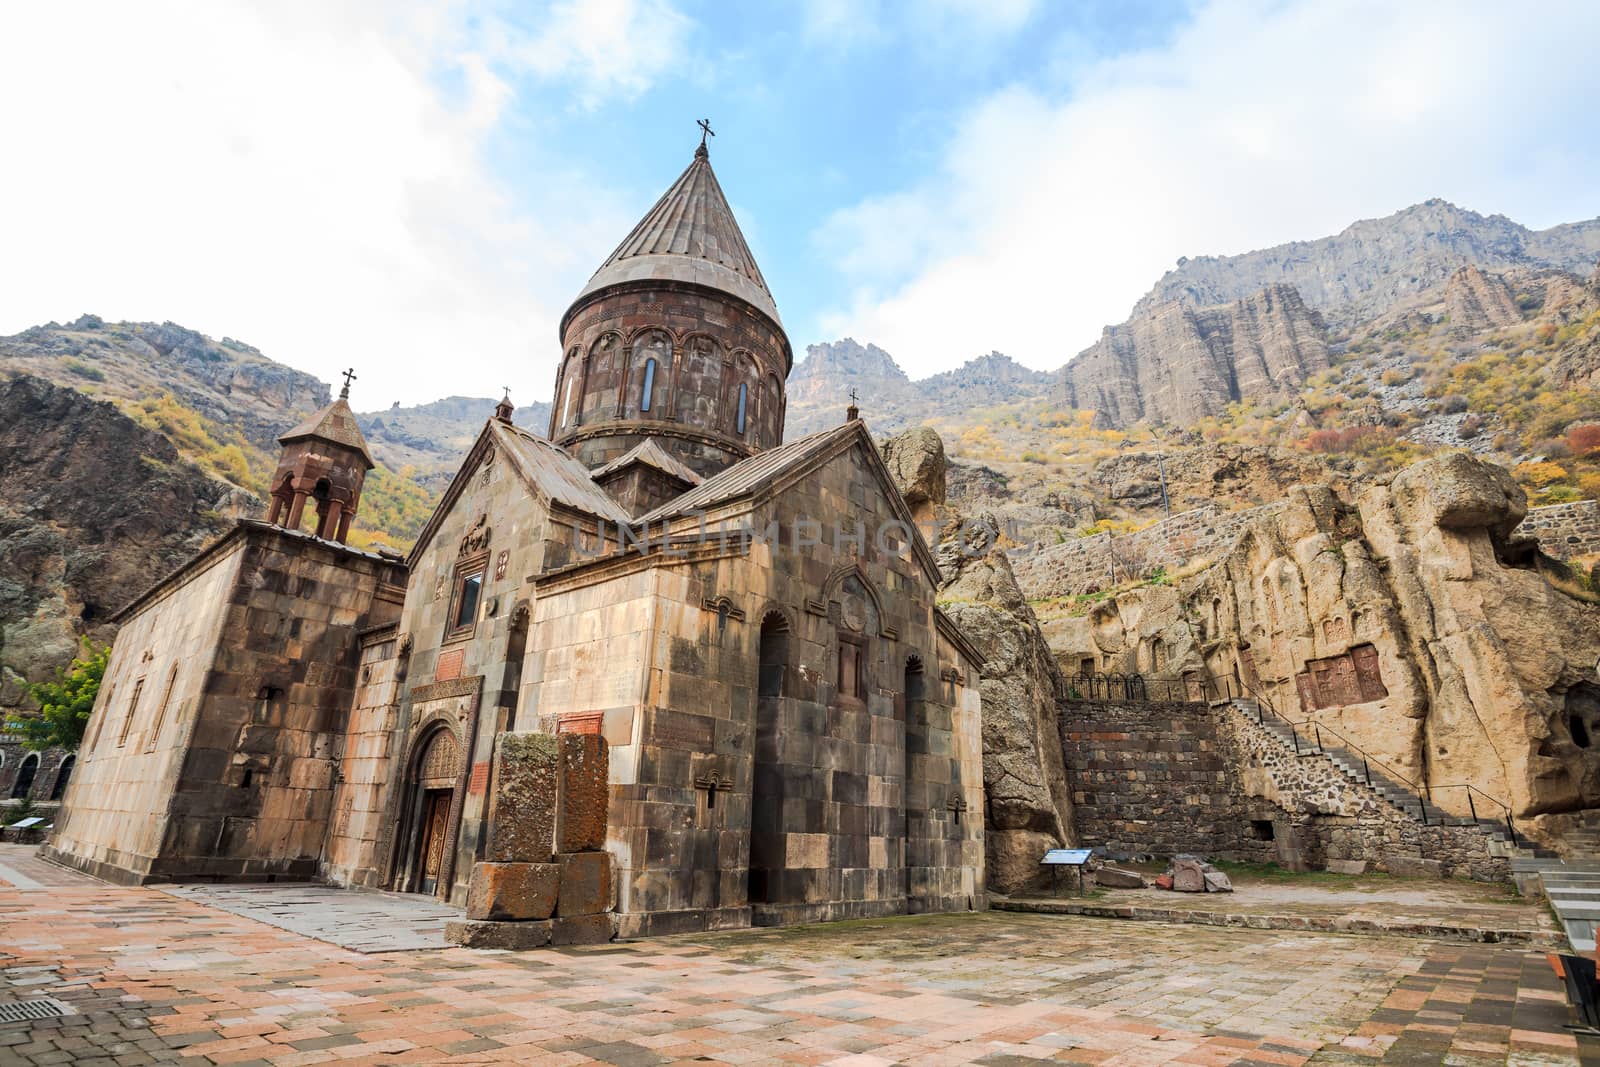 Monastery of geghard is an orthodox christian monastery located in kotayk province of armenia